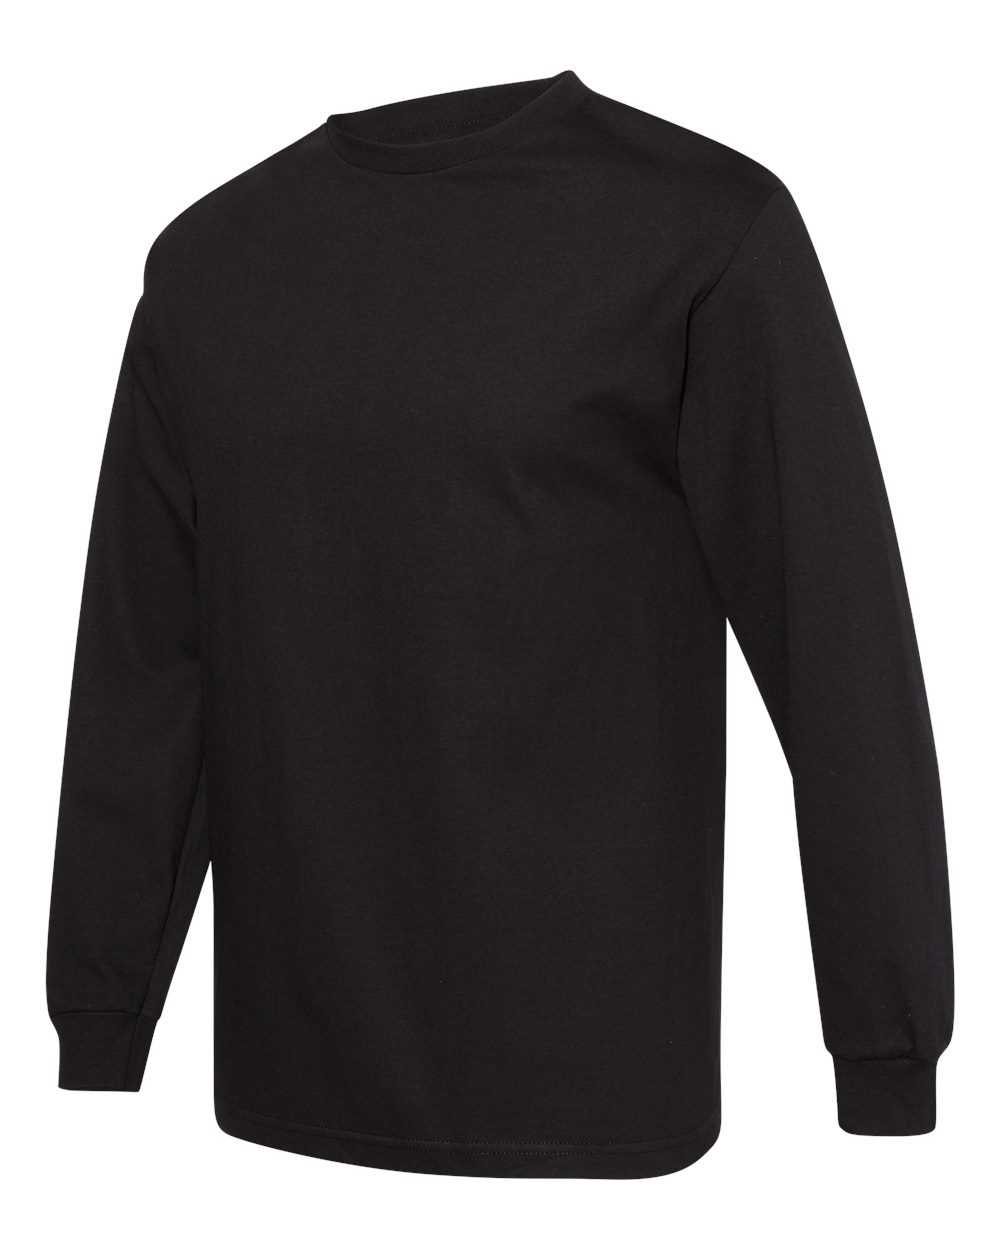 American Apparel 1304 Unisex Heavyweight Cotton Long Sleeve T-Shirt - Black - HIT a Double